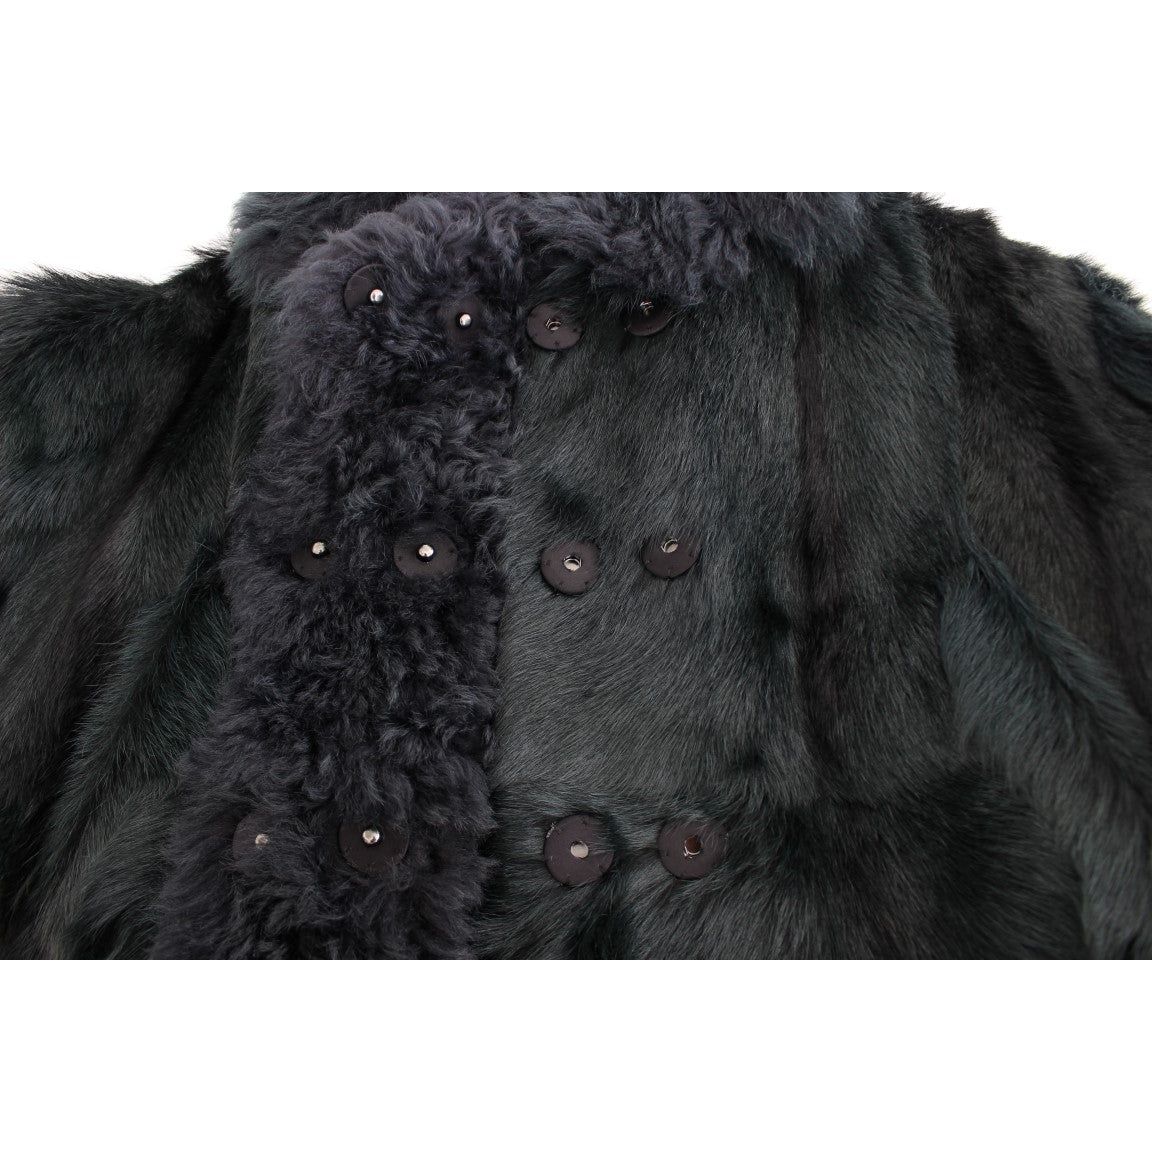 Dolce & Gabbana Exquisite Shearling Coat Jacket black-goat-fur-shearling-long-jacket-coat 62390-black-goat-fur-shearling-long-jacket-coat-8.jpg